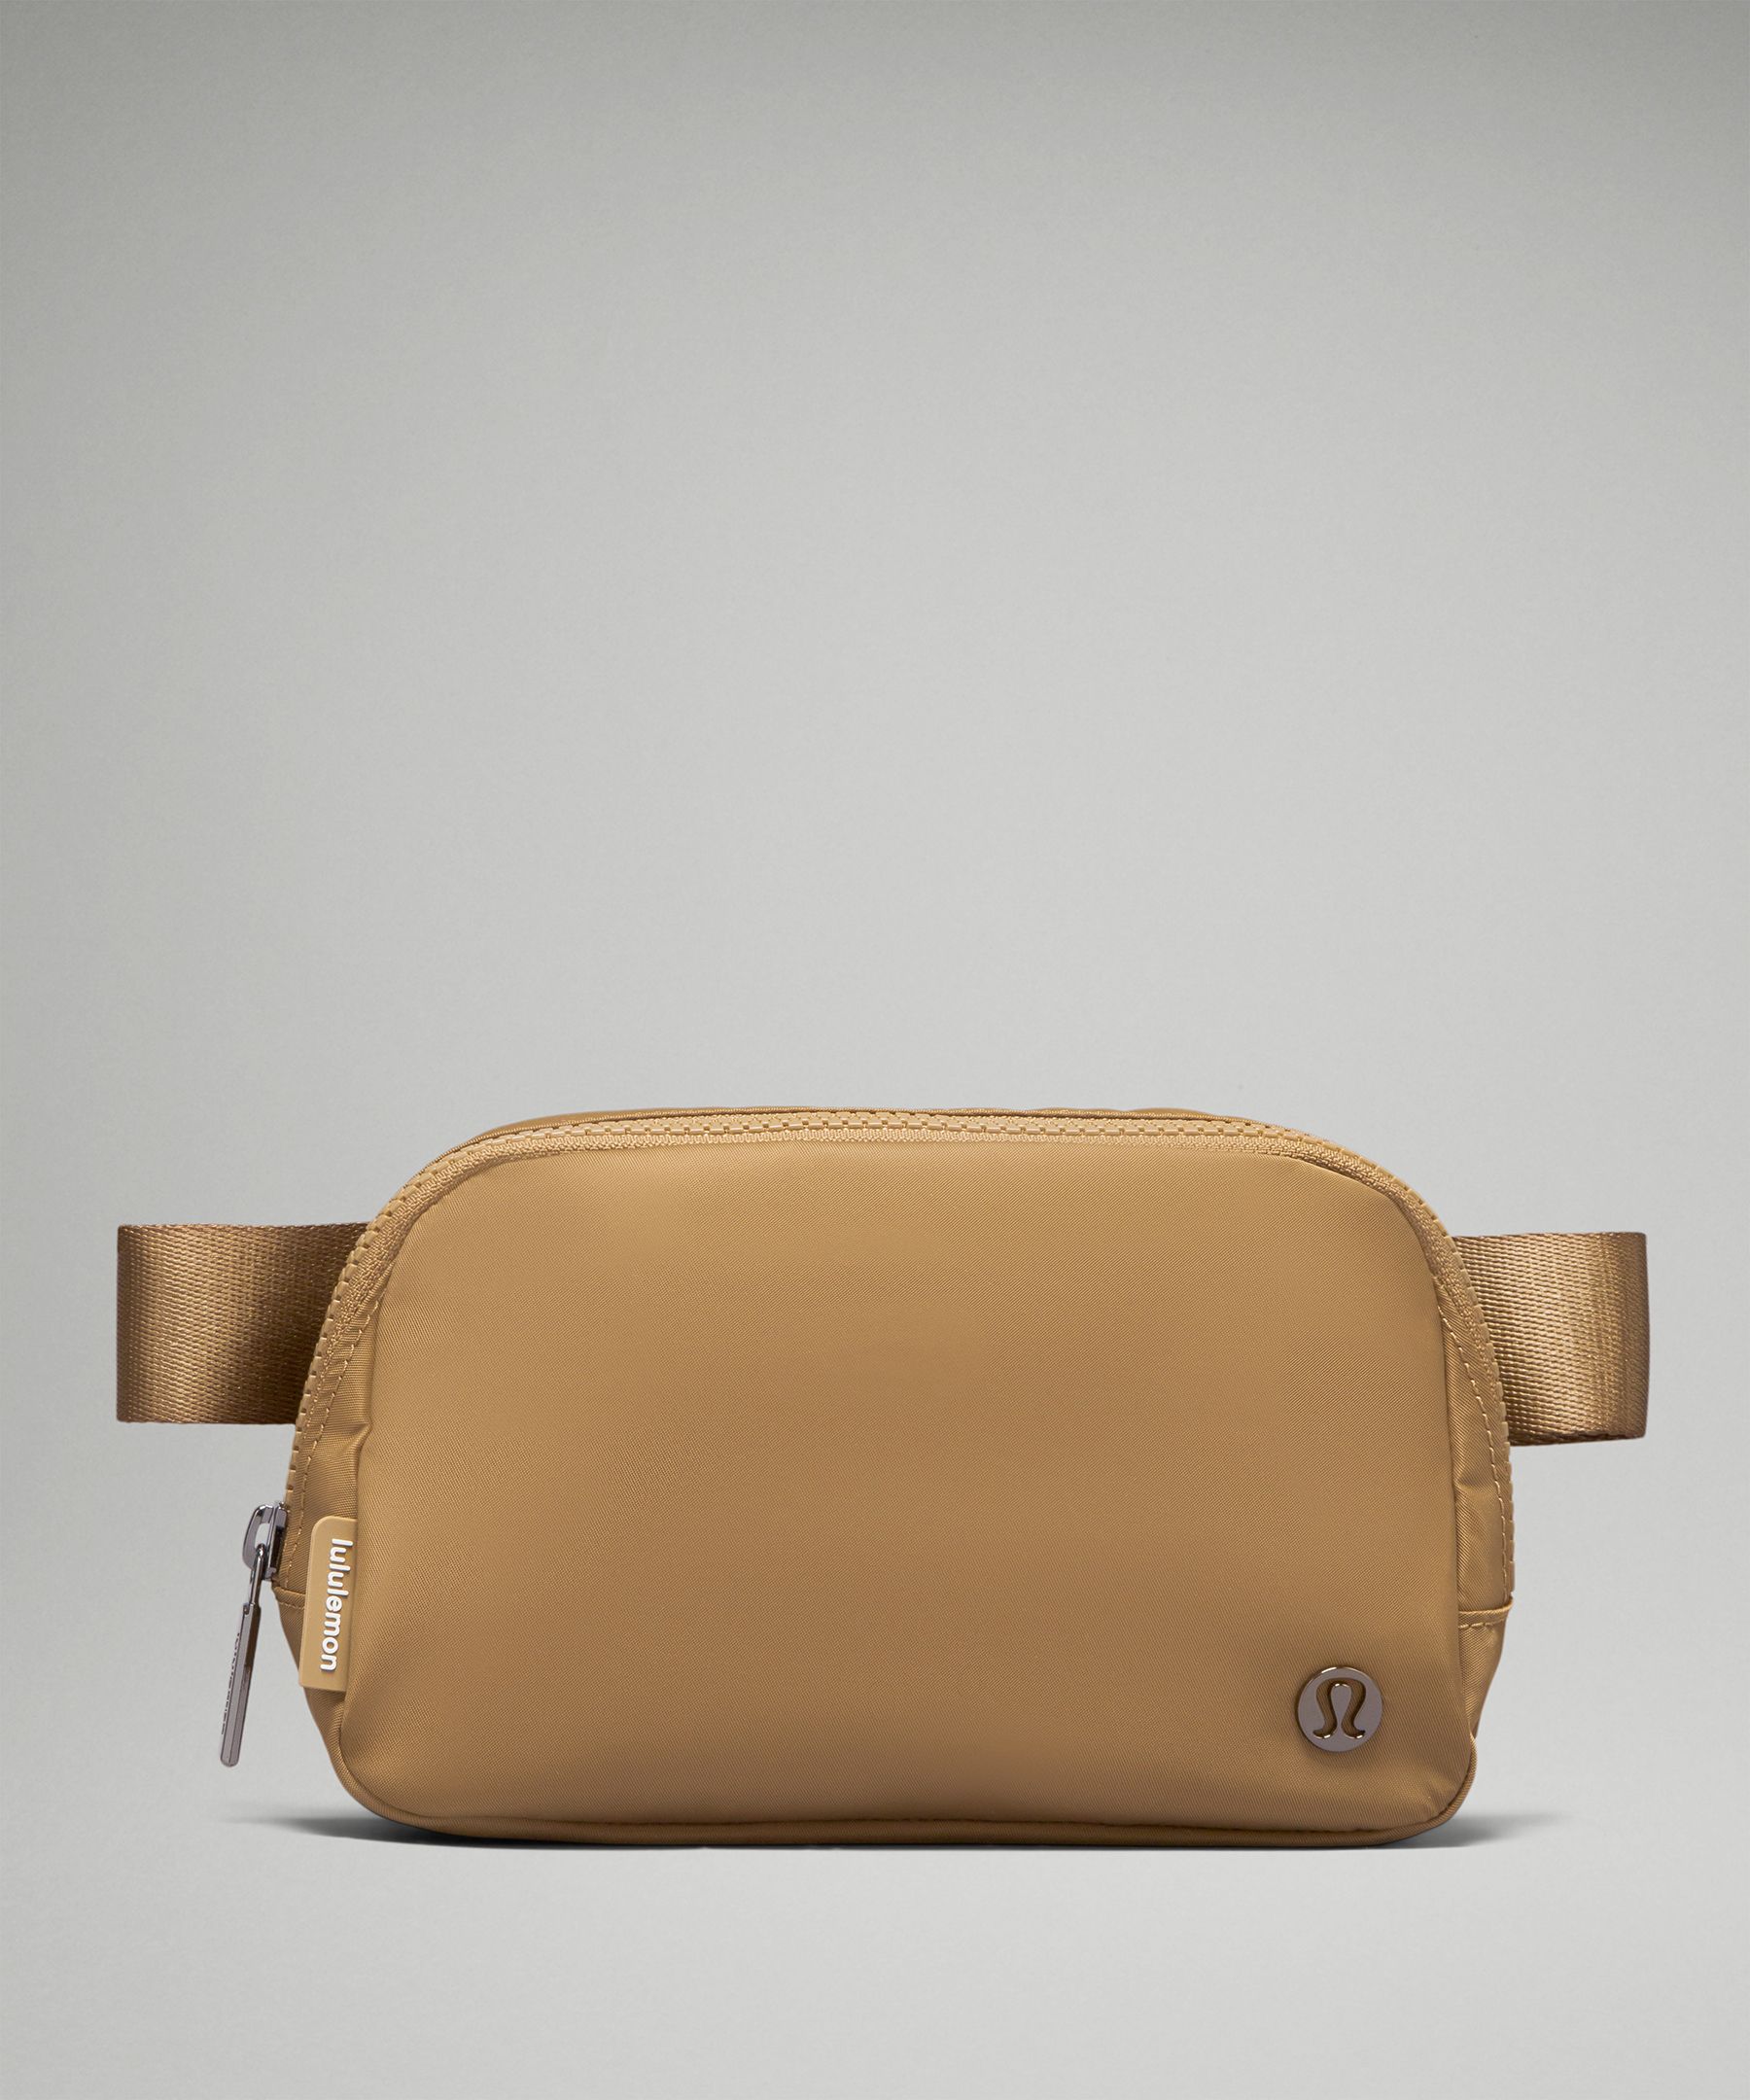 Lululemon Clear Belt Bag 1L Logo - Black/Neutral Water-Resistant Fabric